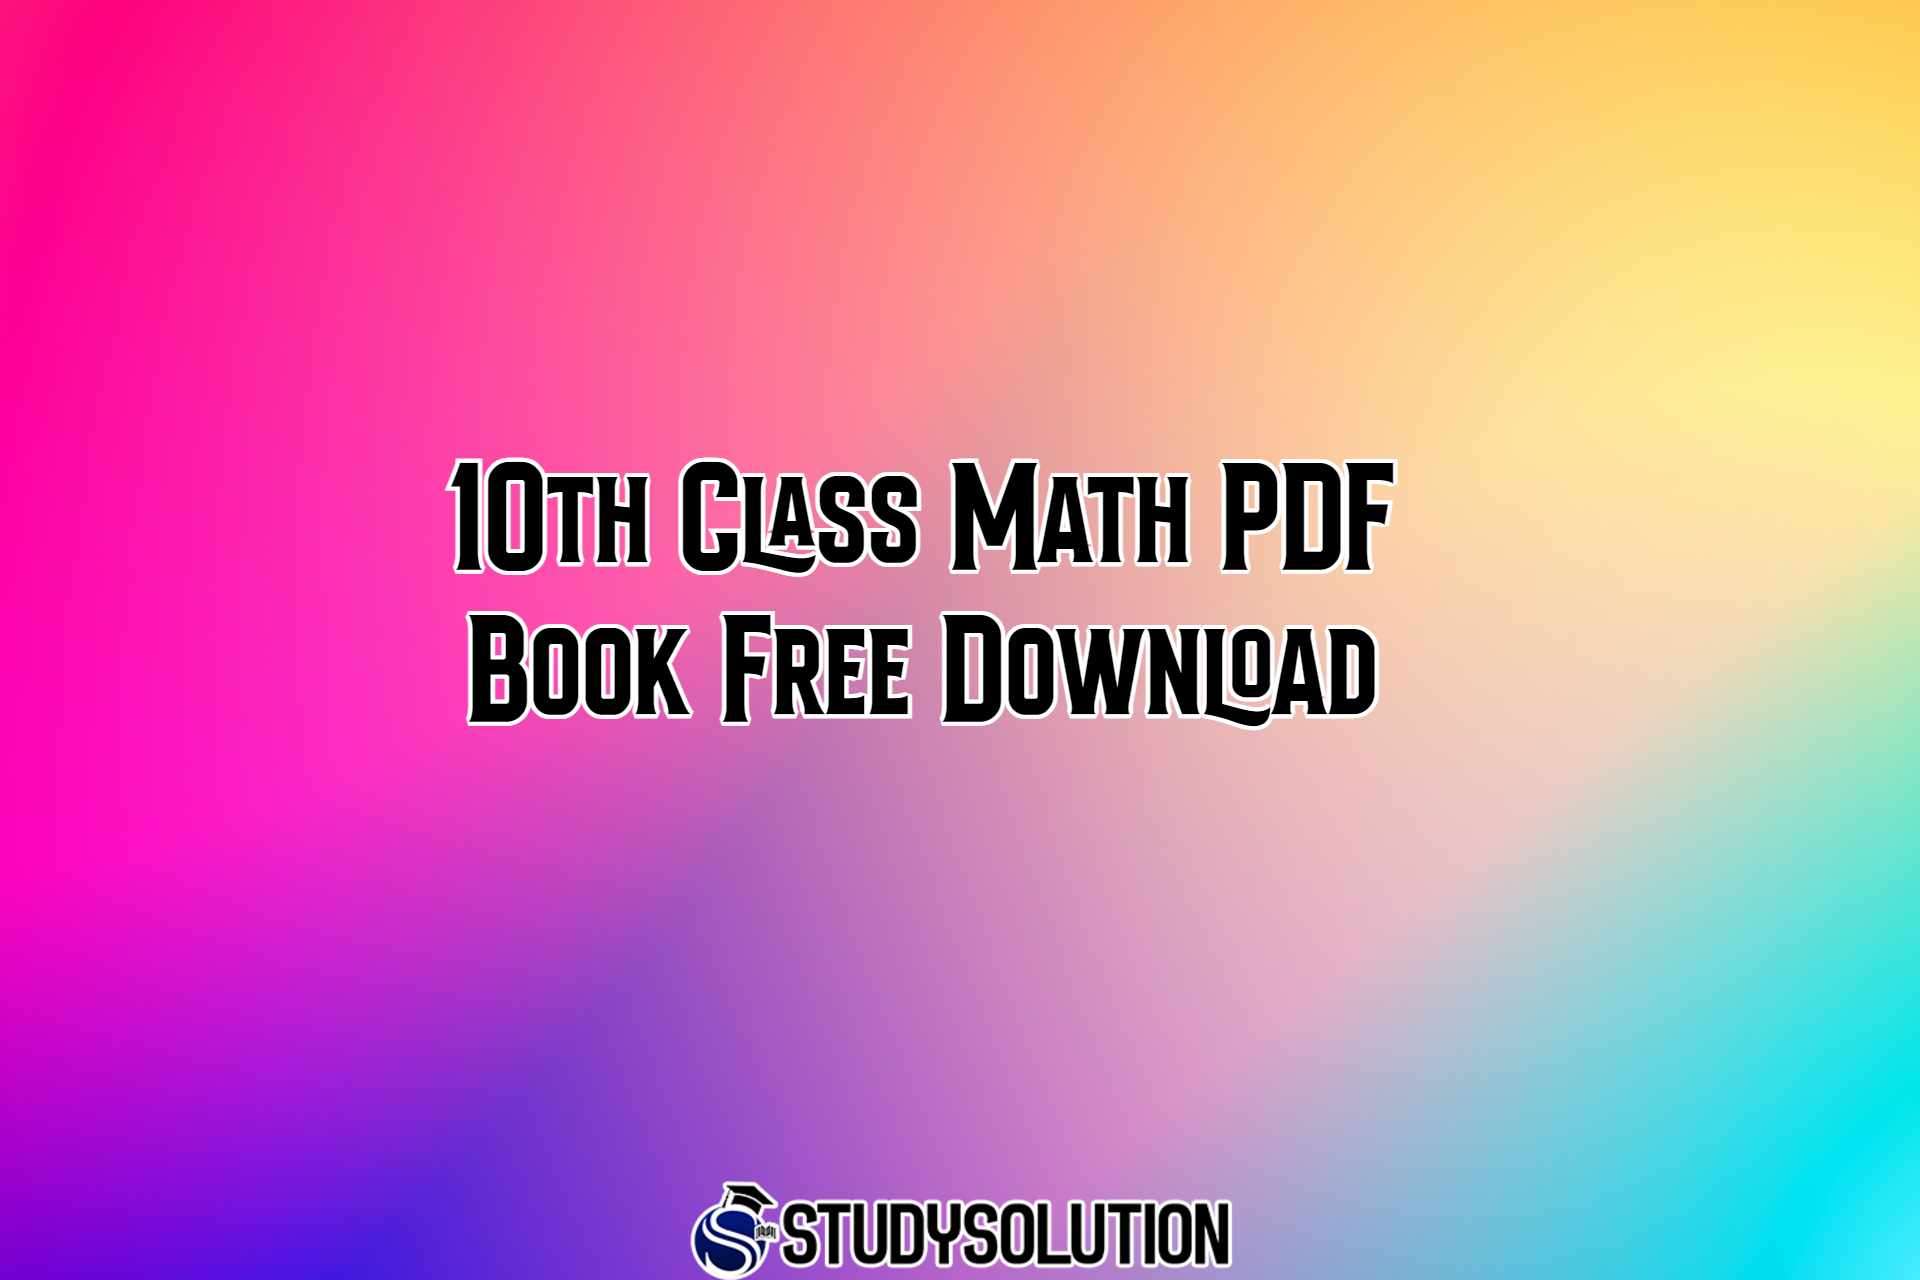 10th Class Math PDF Book Free Download